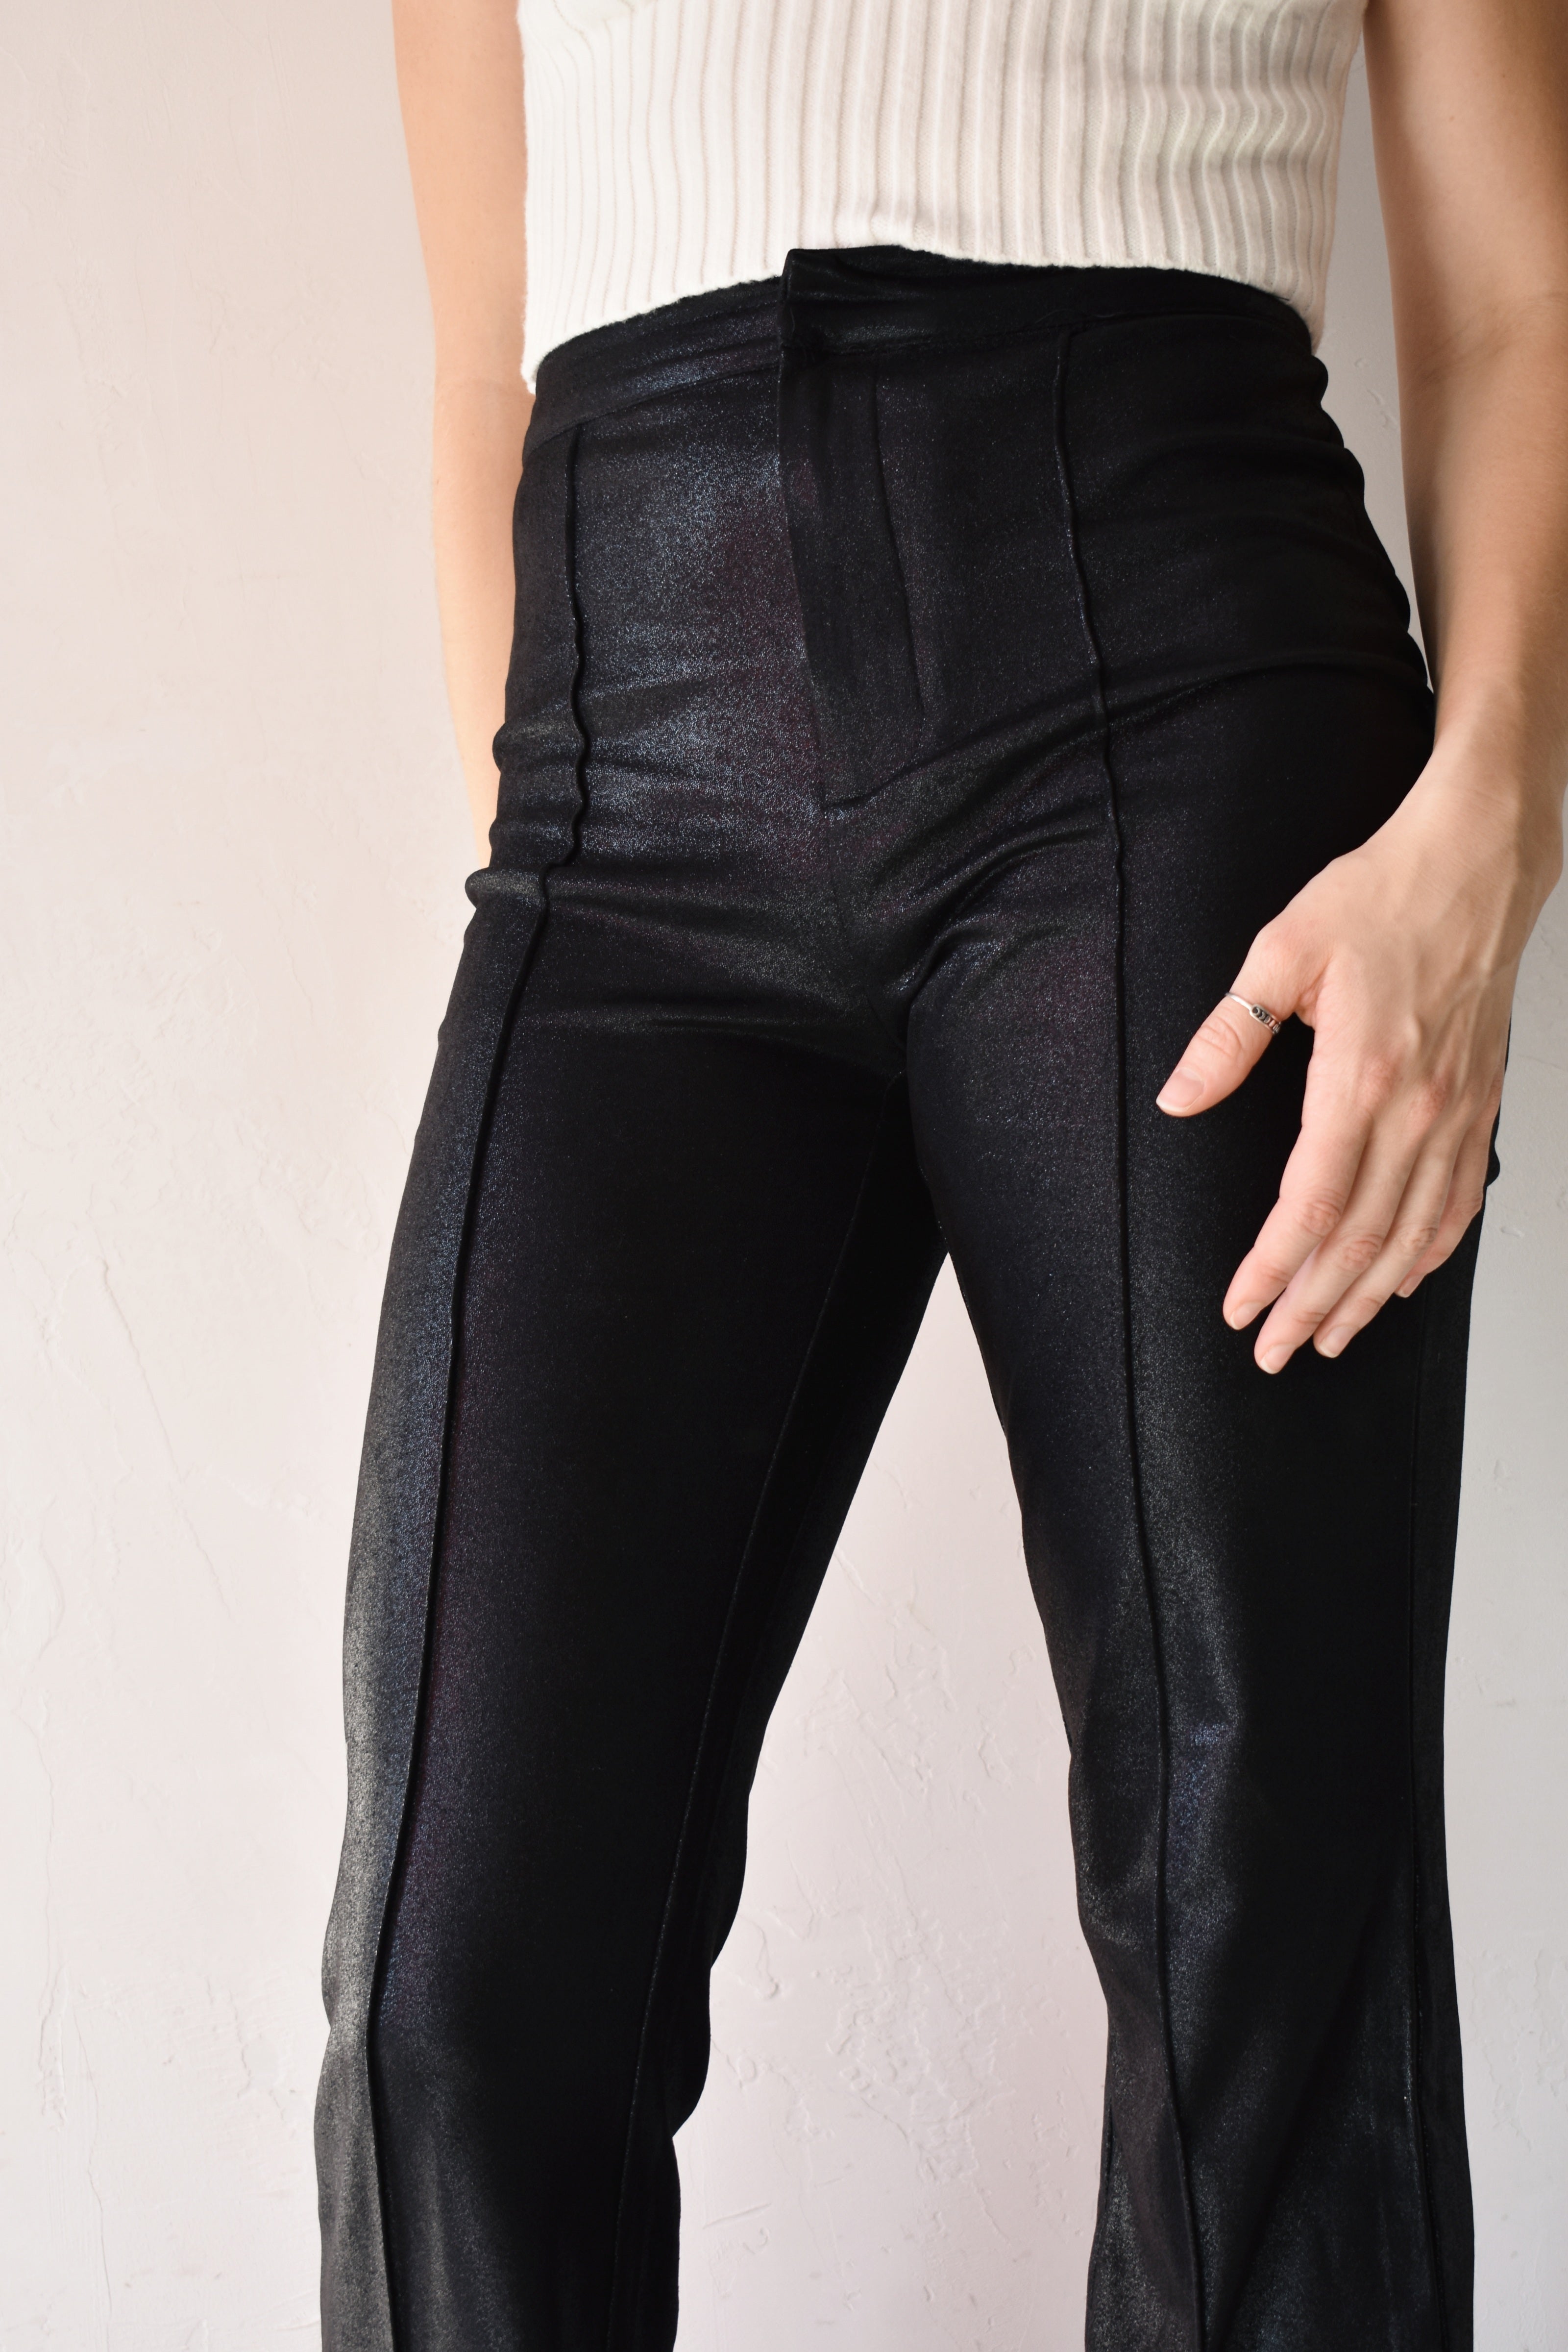 Black Faux Leather Leatherette Pintuck Leggings High Waist Pants Fleece  inside